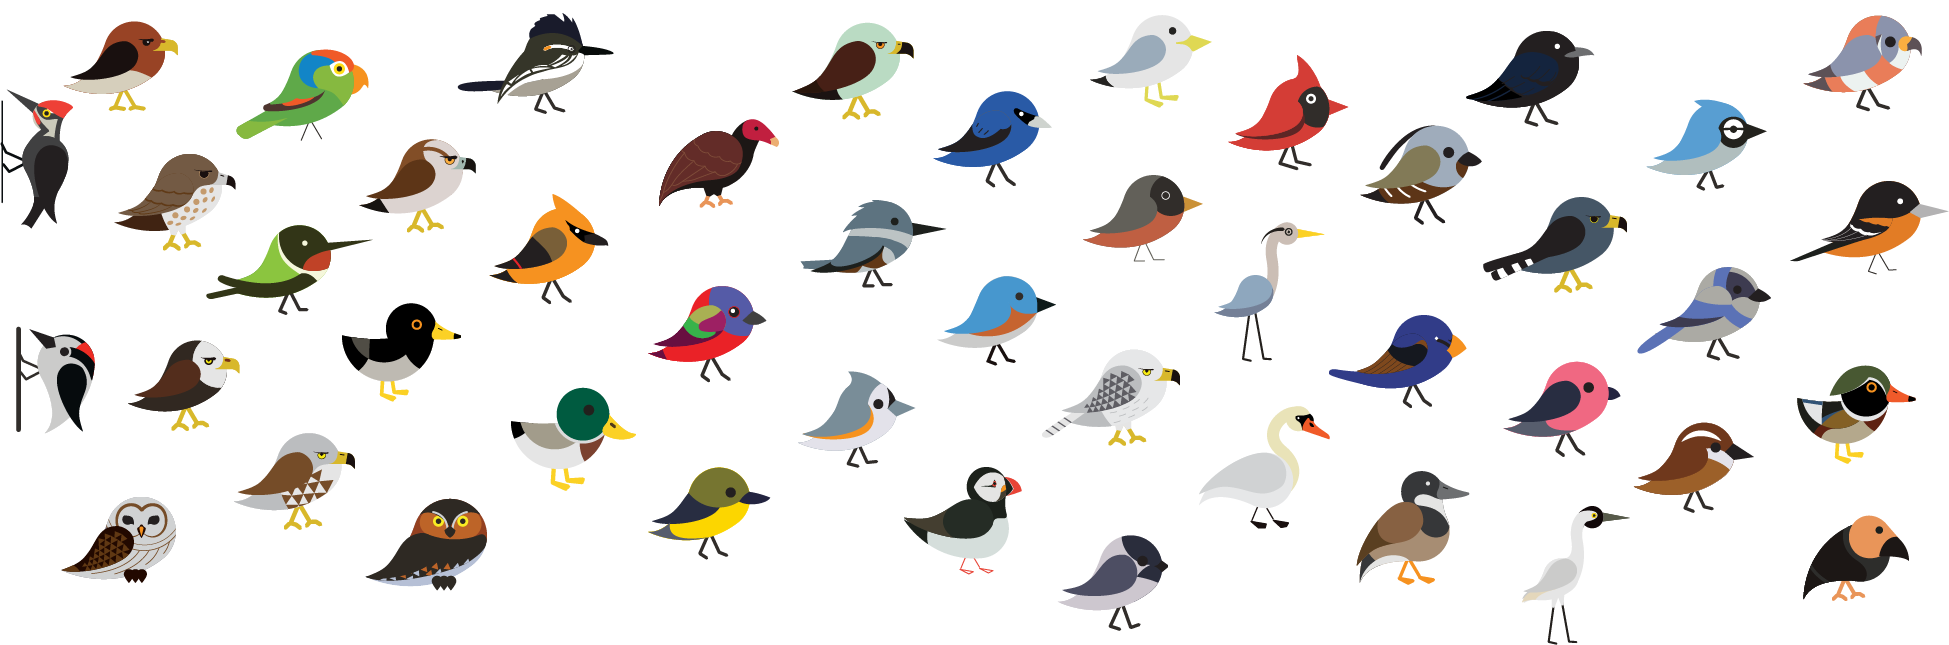 Types of birds